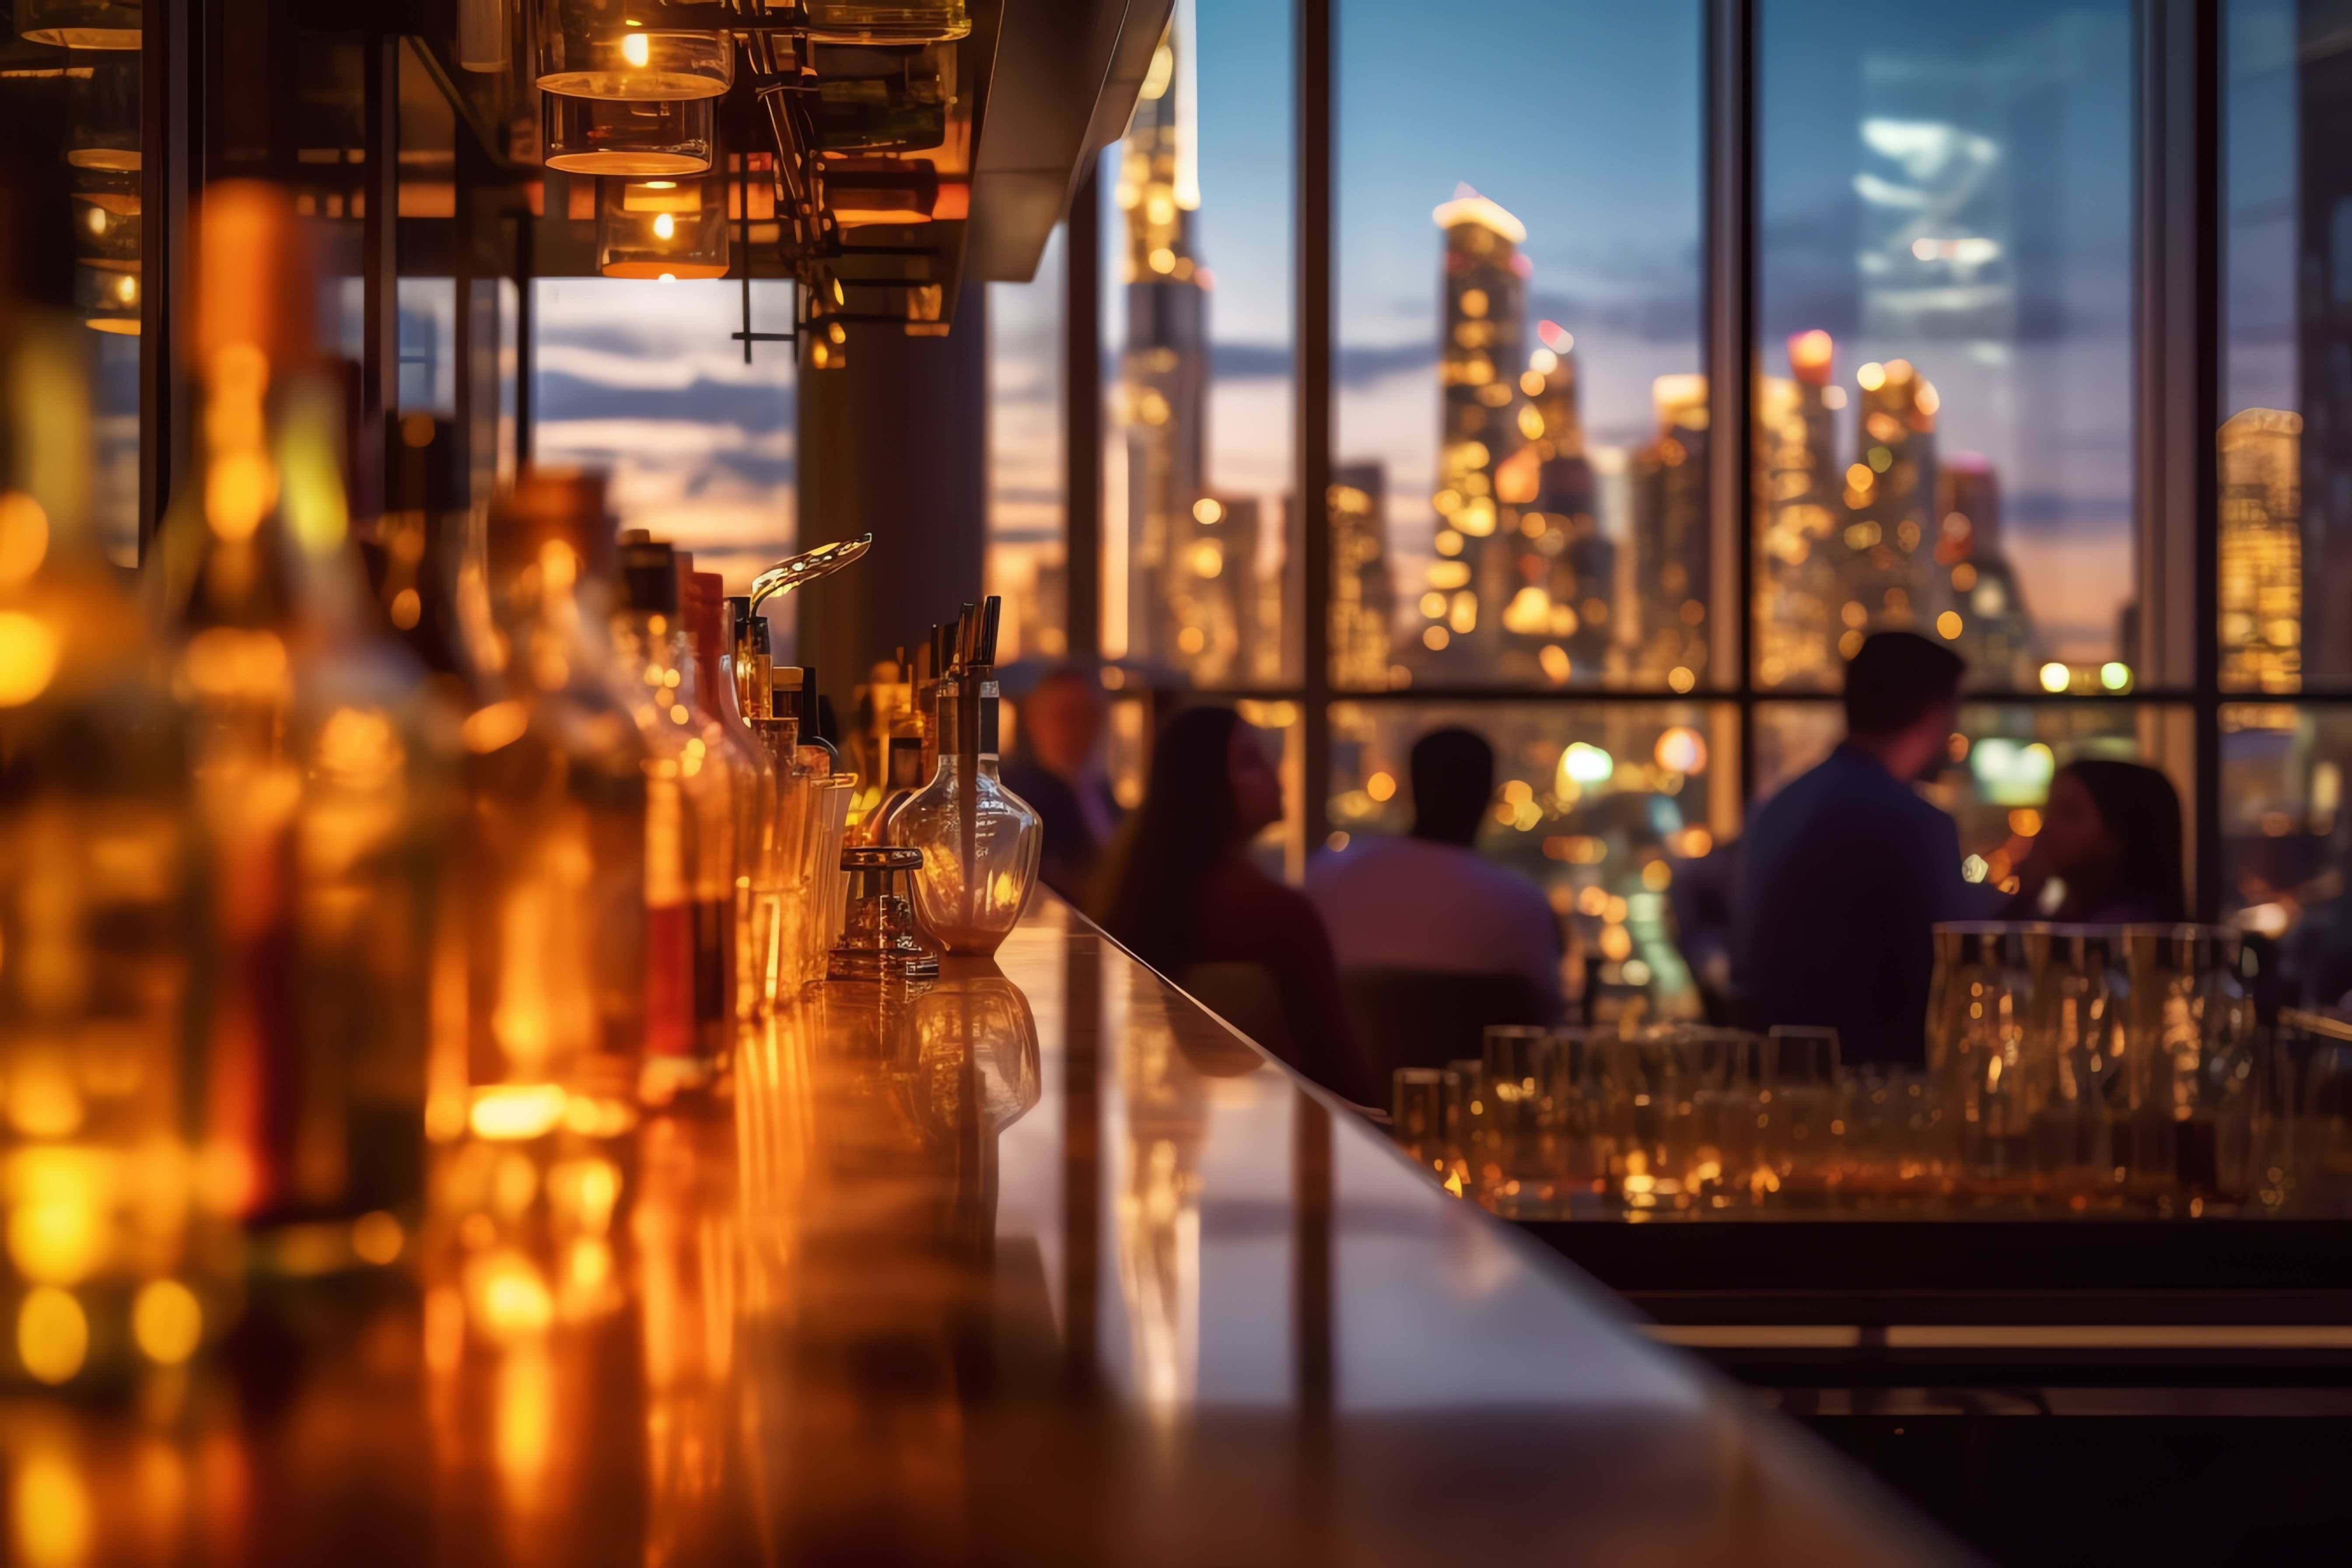 A busy bar overlooking the Manhattan skyline